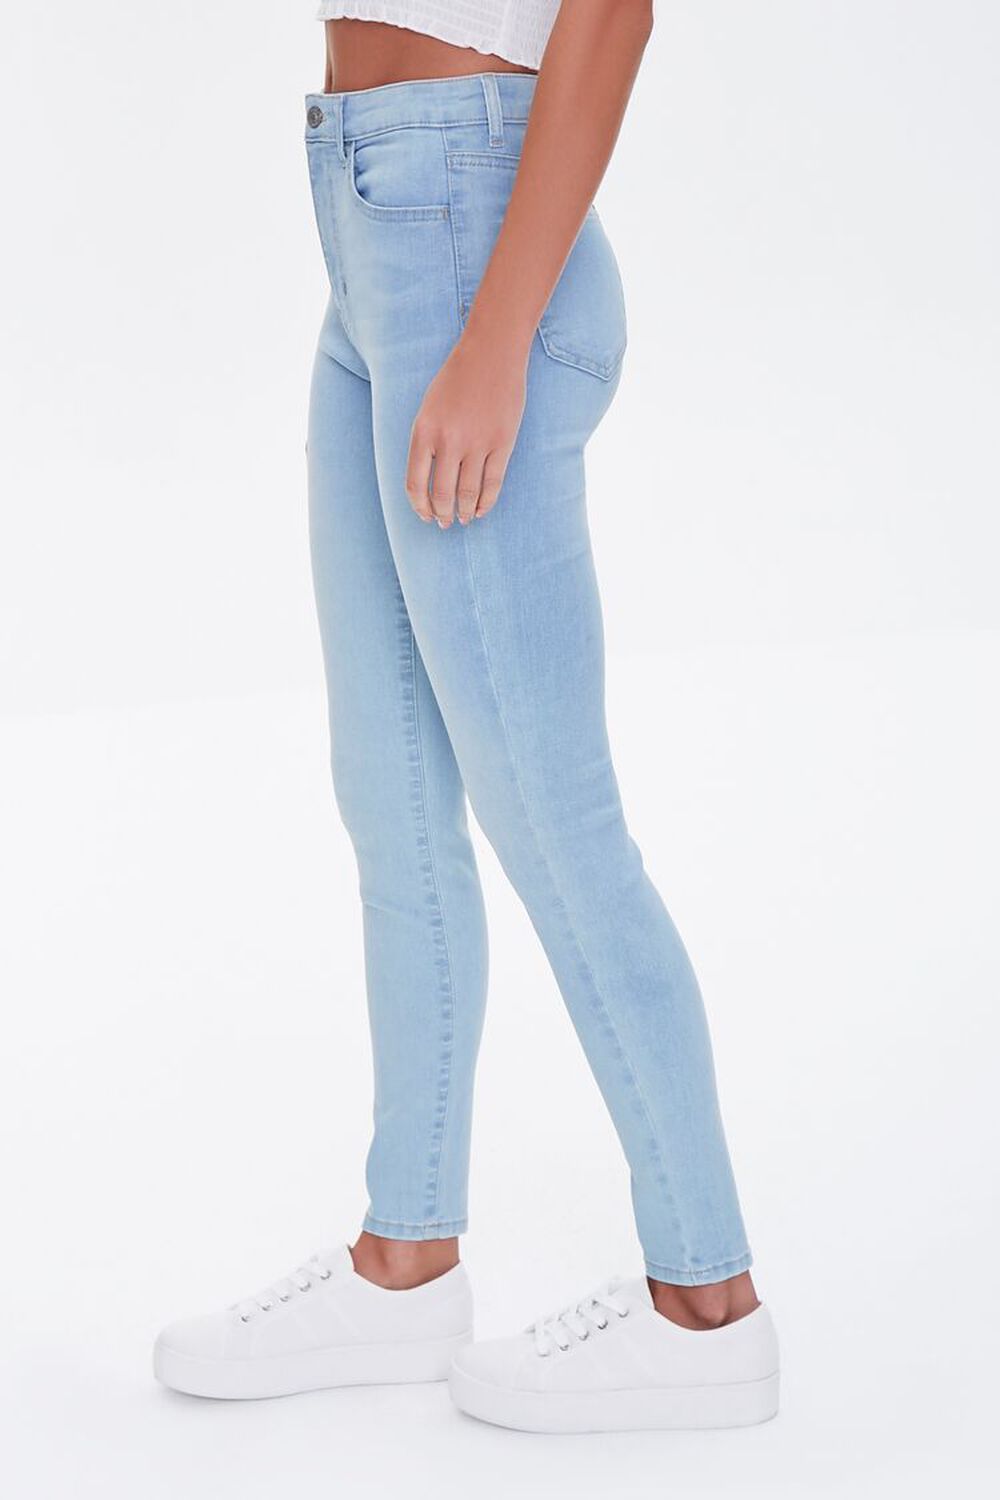 LIGHT DENIM Super-Stretch High-Rise Skinny Jeans, image 3